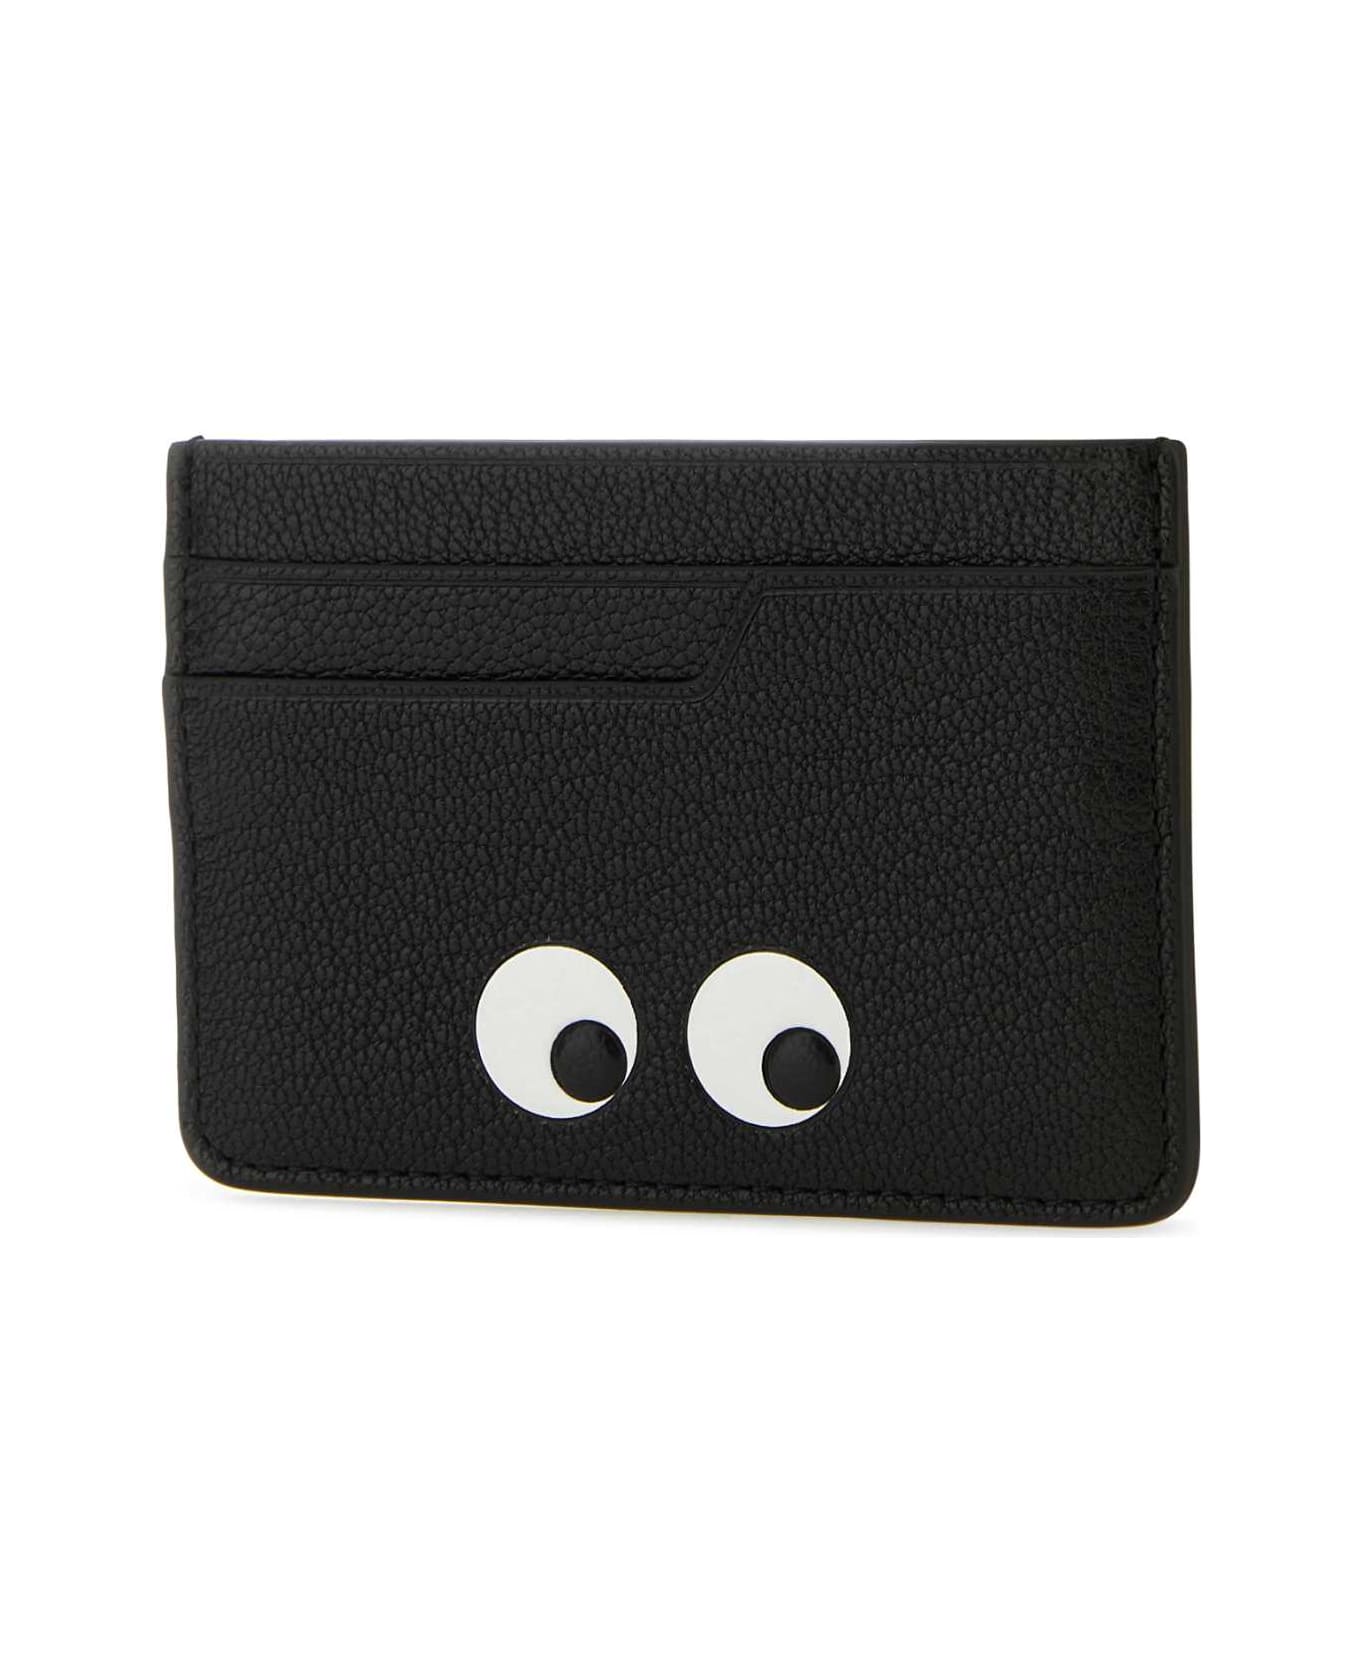 Anya Hindmarch Black Leather Card Holder - BLACK 財布